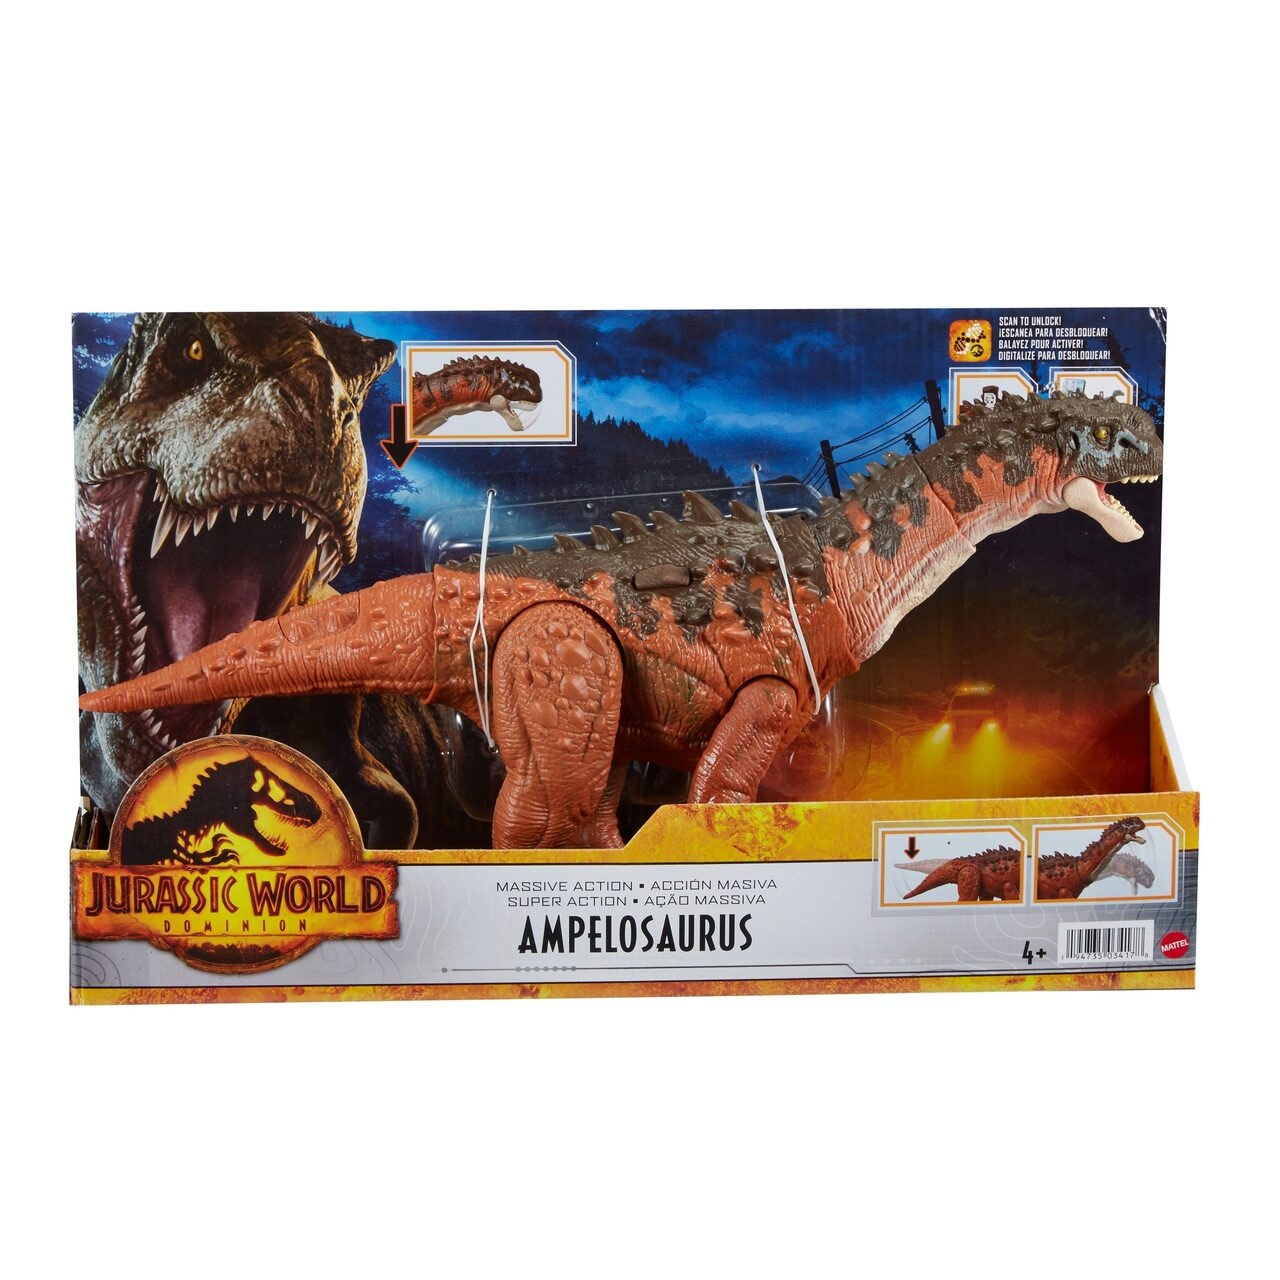 Jurassic World Massive Action Ampelosaurus von Mattel